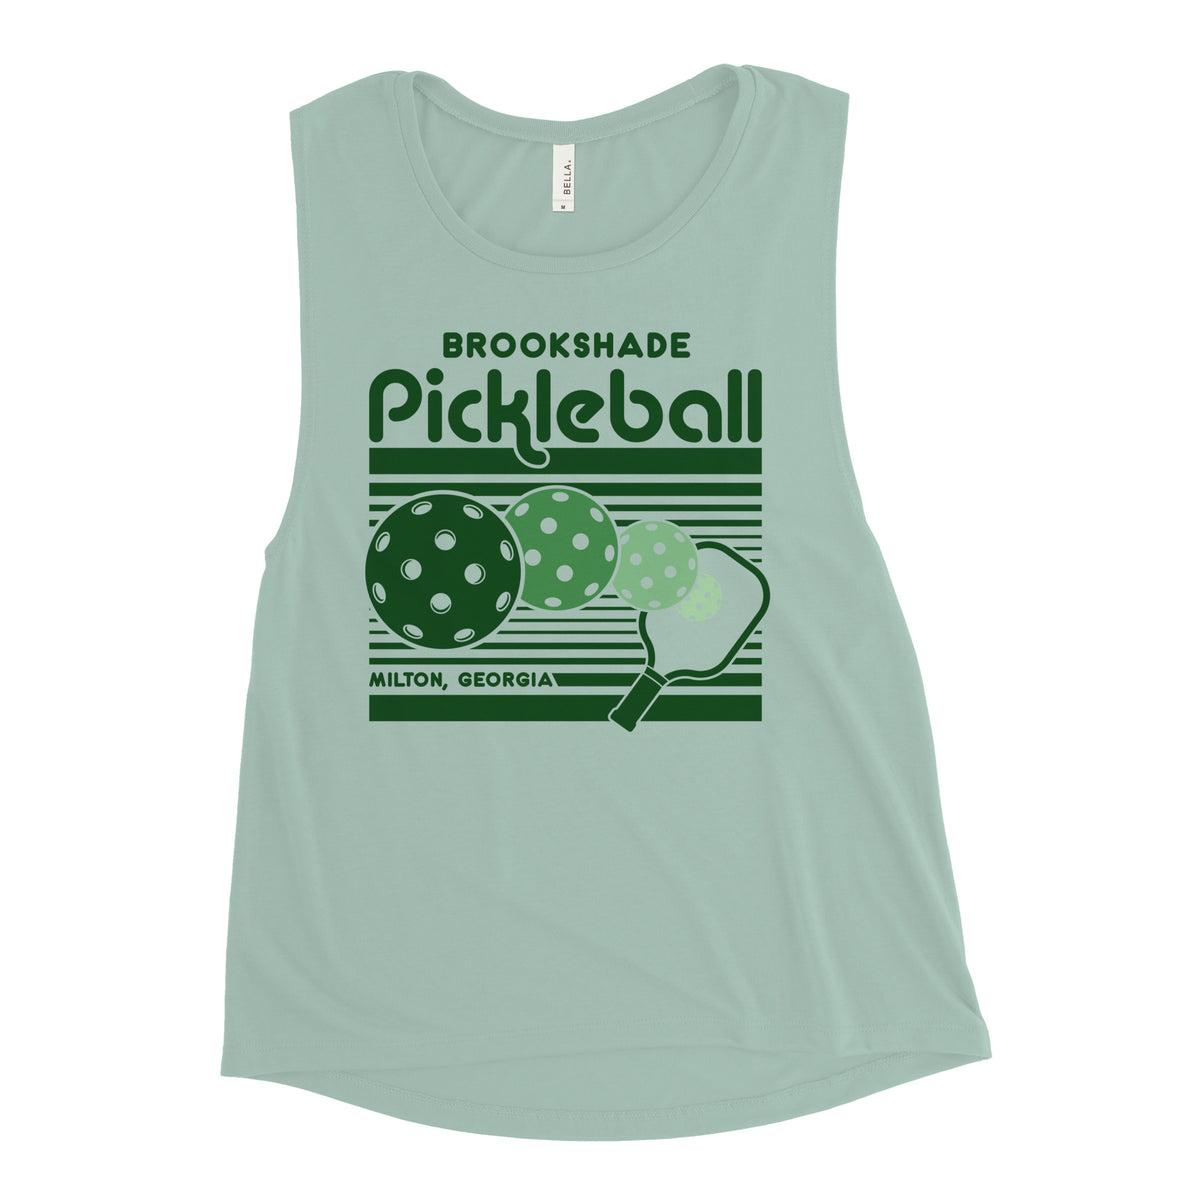 Brookshade Pickleball Women's Muscle Shirt